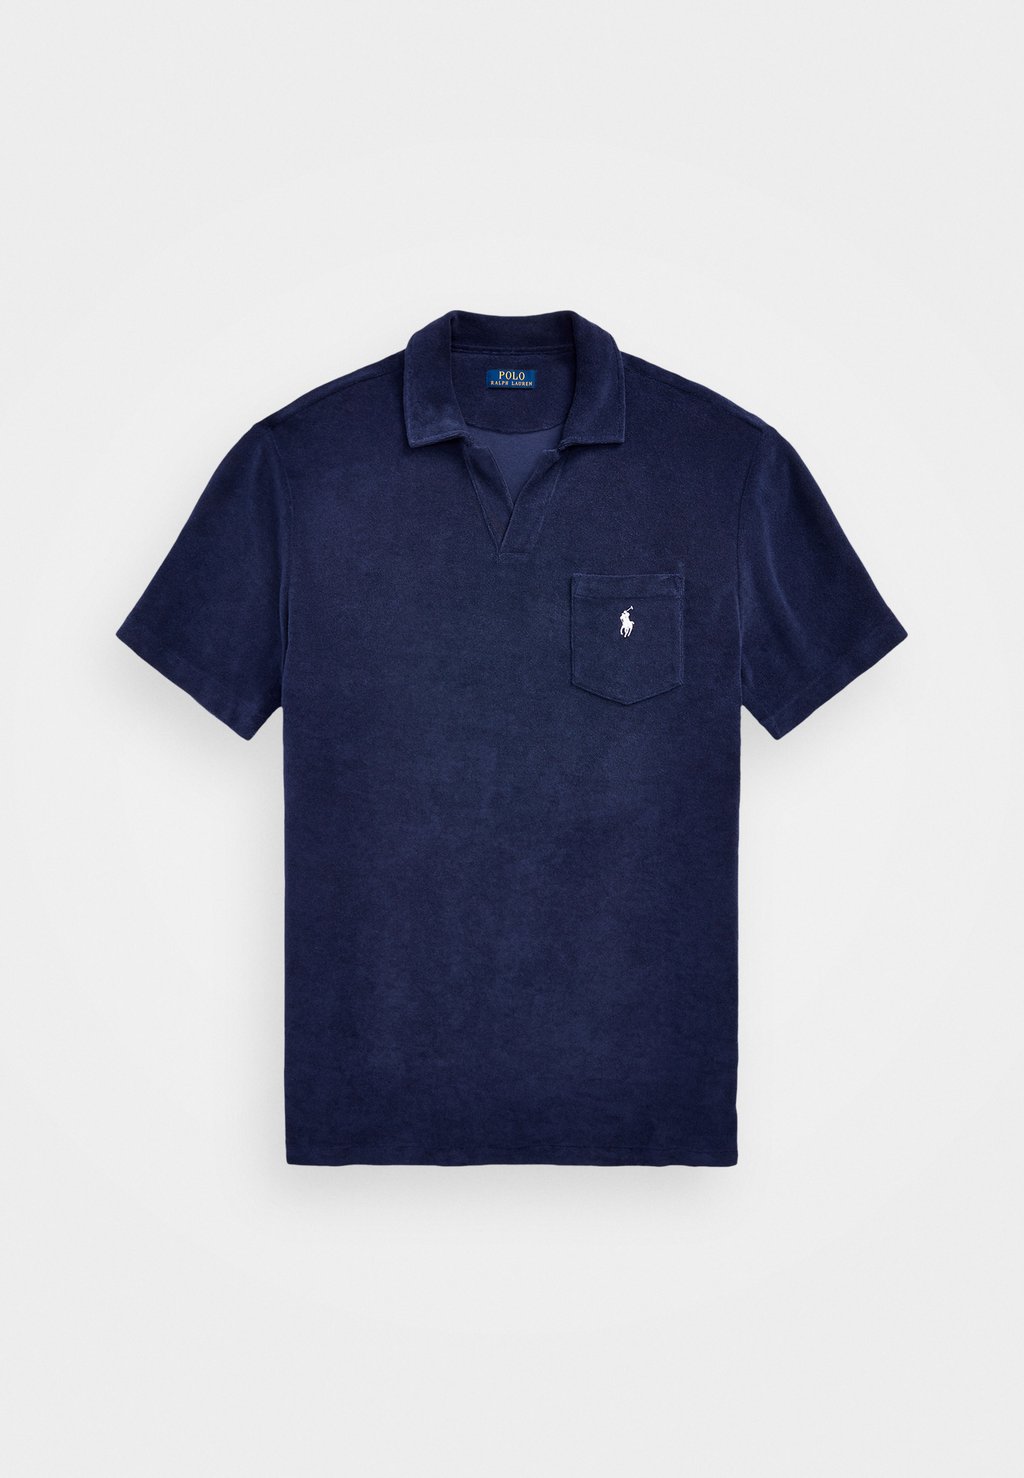 Рубашка поло Polo Ralph Lauren Big & Tall, темно-синий детская футболка поло 134 176 см polo ralph lauren темно синий